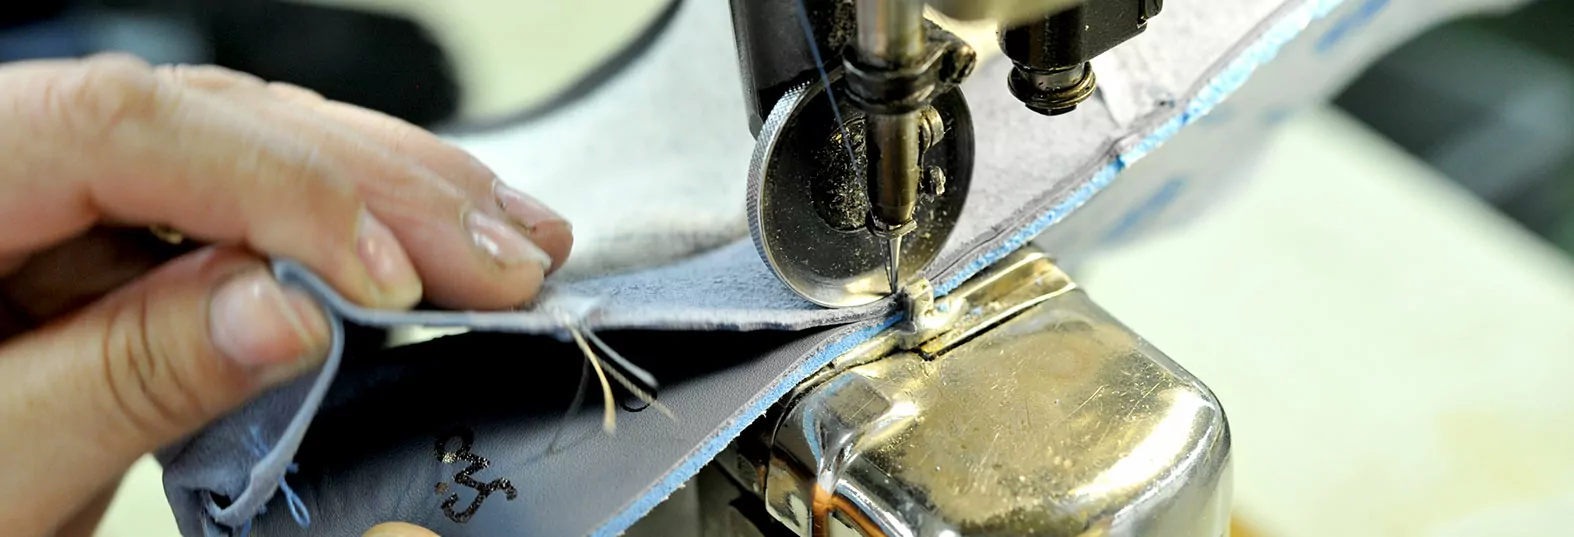 Small manual pressure fixing machine, shoe press,shoe sole pressure bond  device | eBay